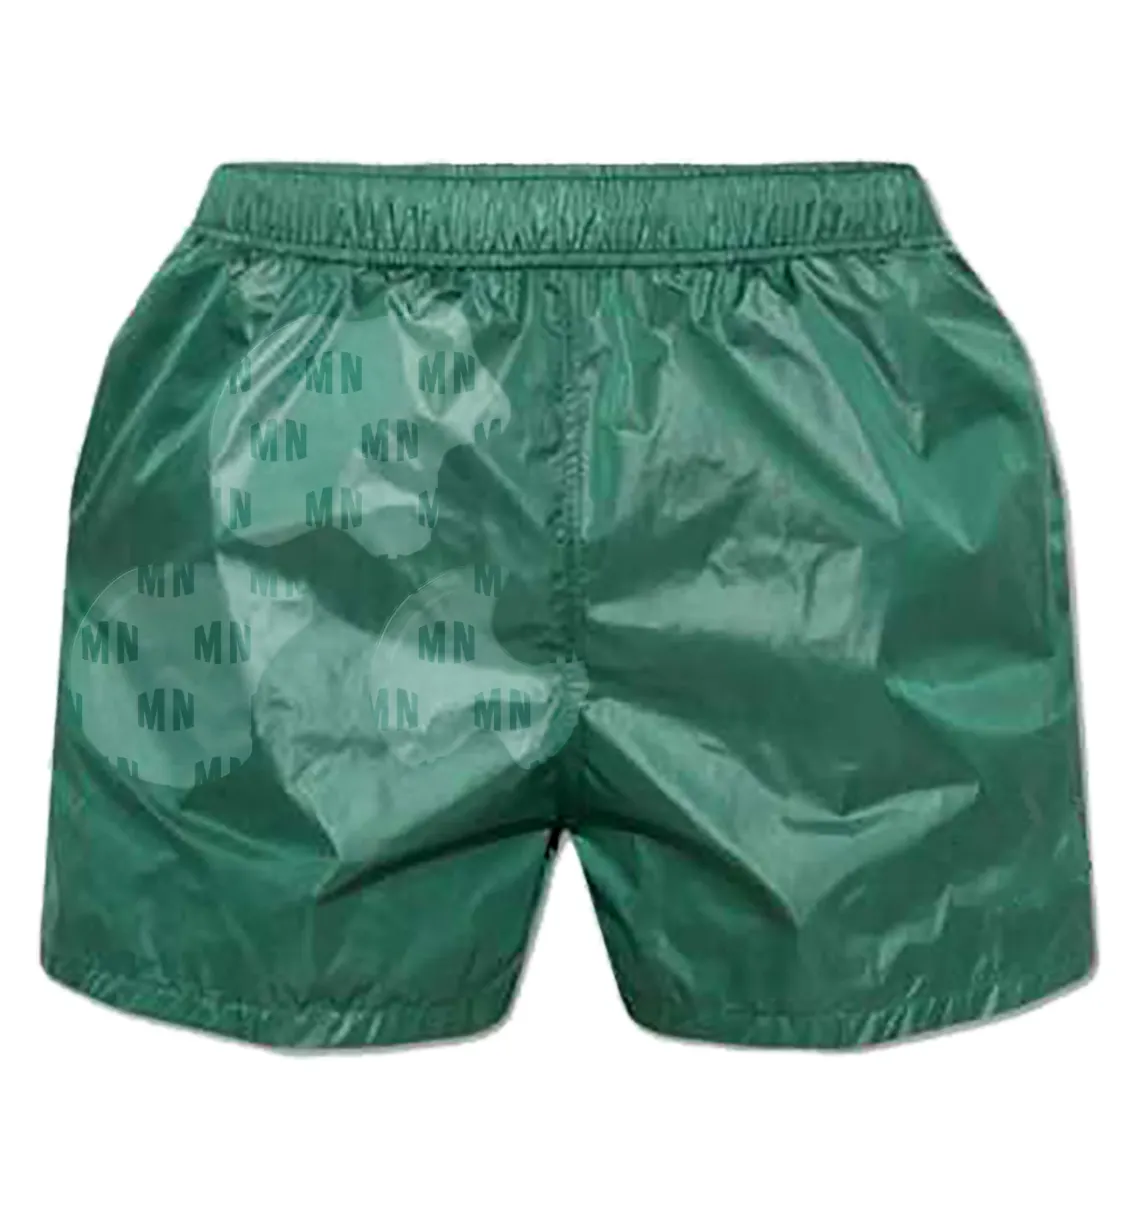 Colorful Sports Shorts Men Swimwear Comfortable And Smooth Nylon Men Swimwear Shorts